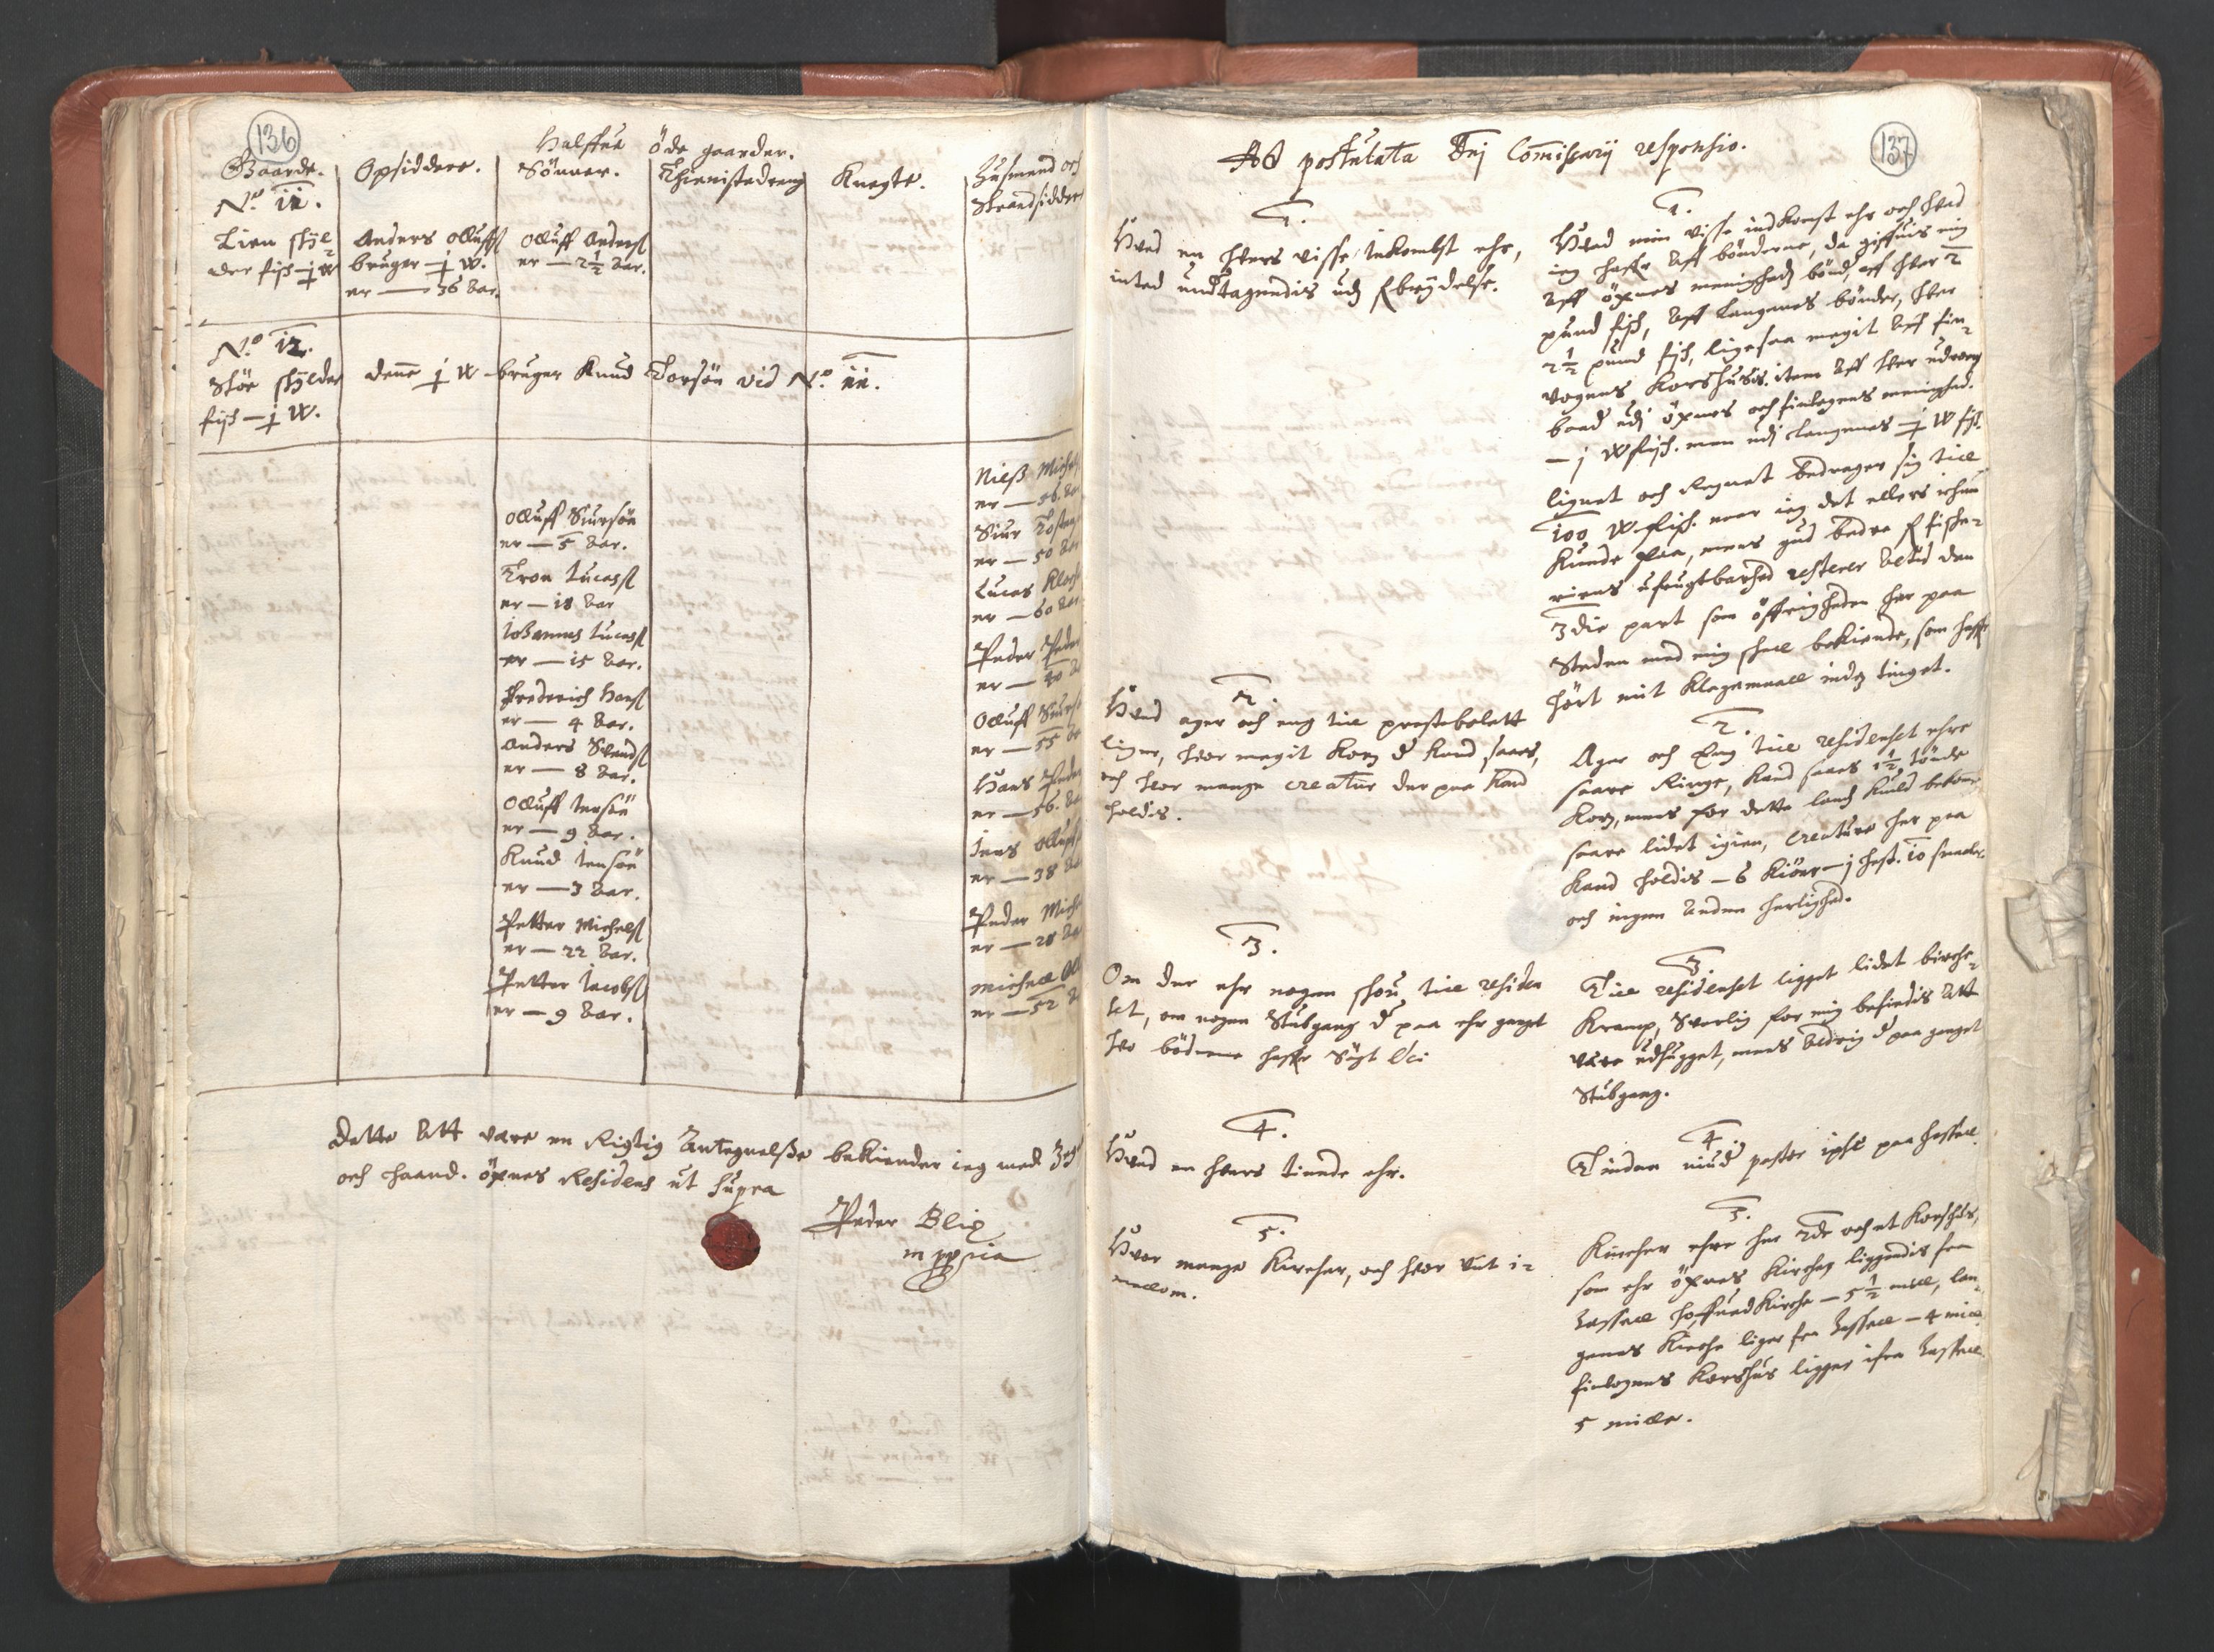 RA, Vicar's Census 1664-1666, no. 36: Lofoten and Vesterålen deanery, Senja deanery and Troms deanery, 1664-1666, p. 136-137